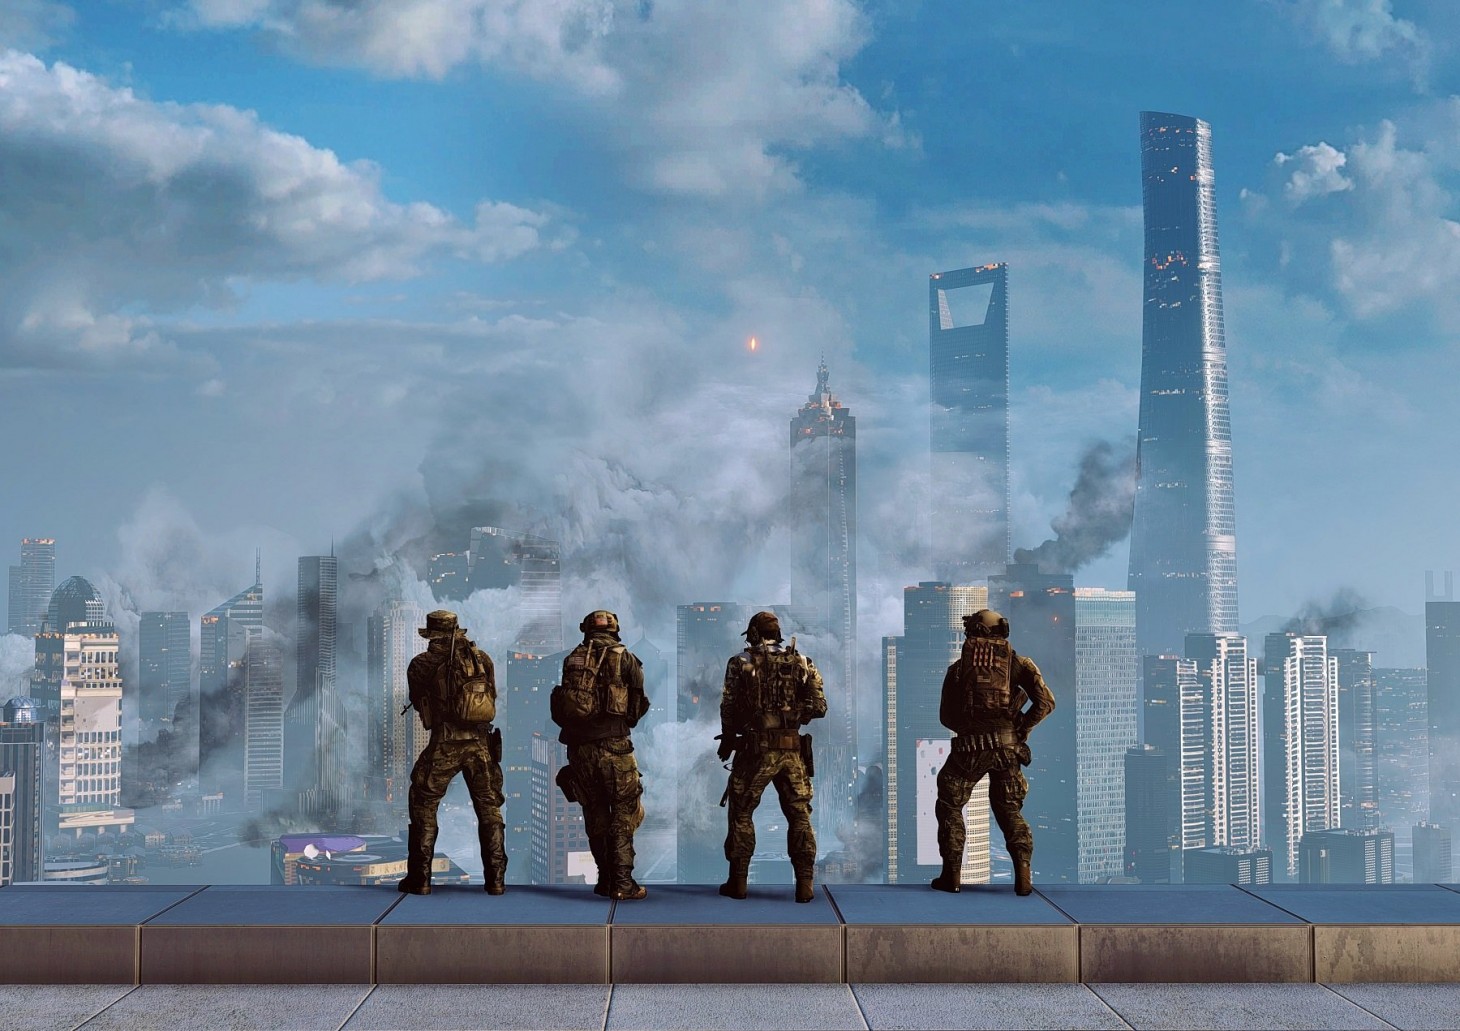 Battlefield 4 servers get slammed as Battlefield 2042 hype heats up